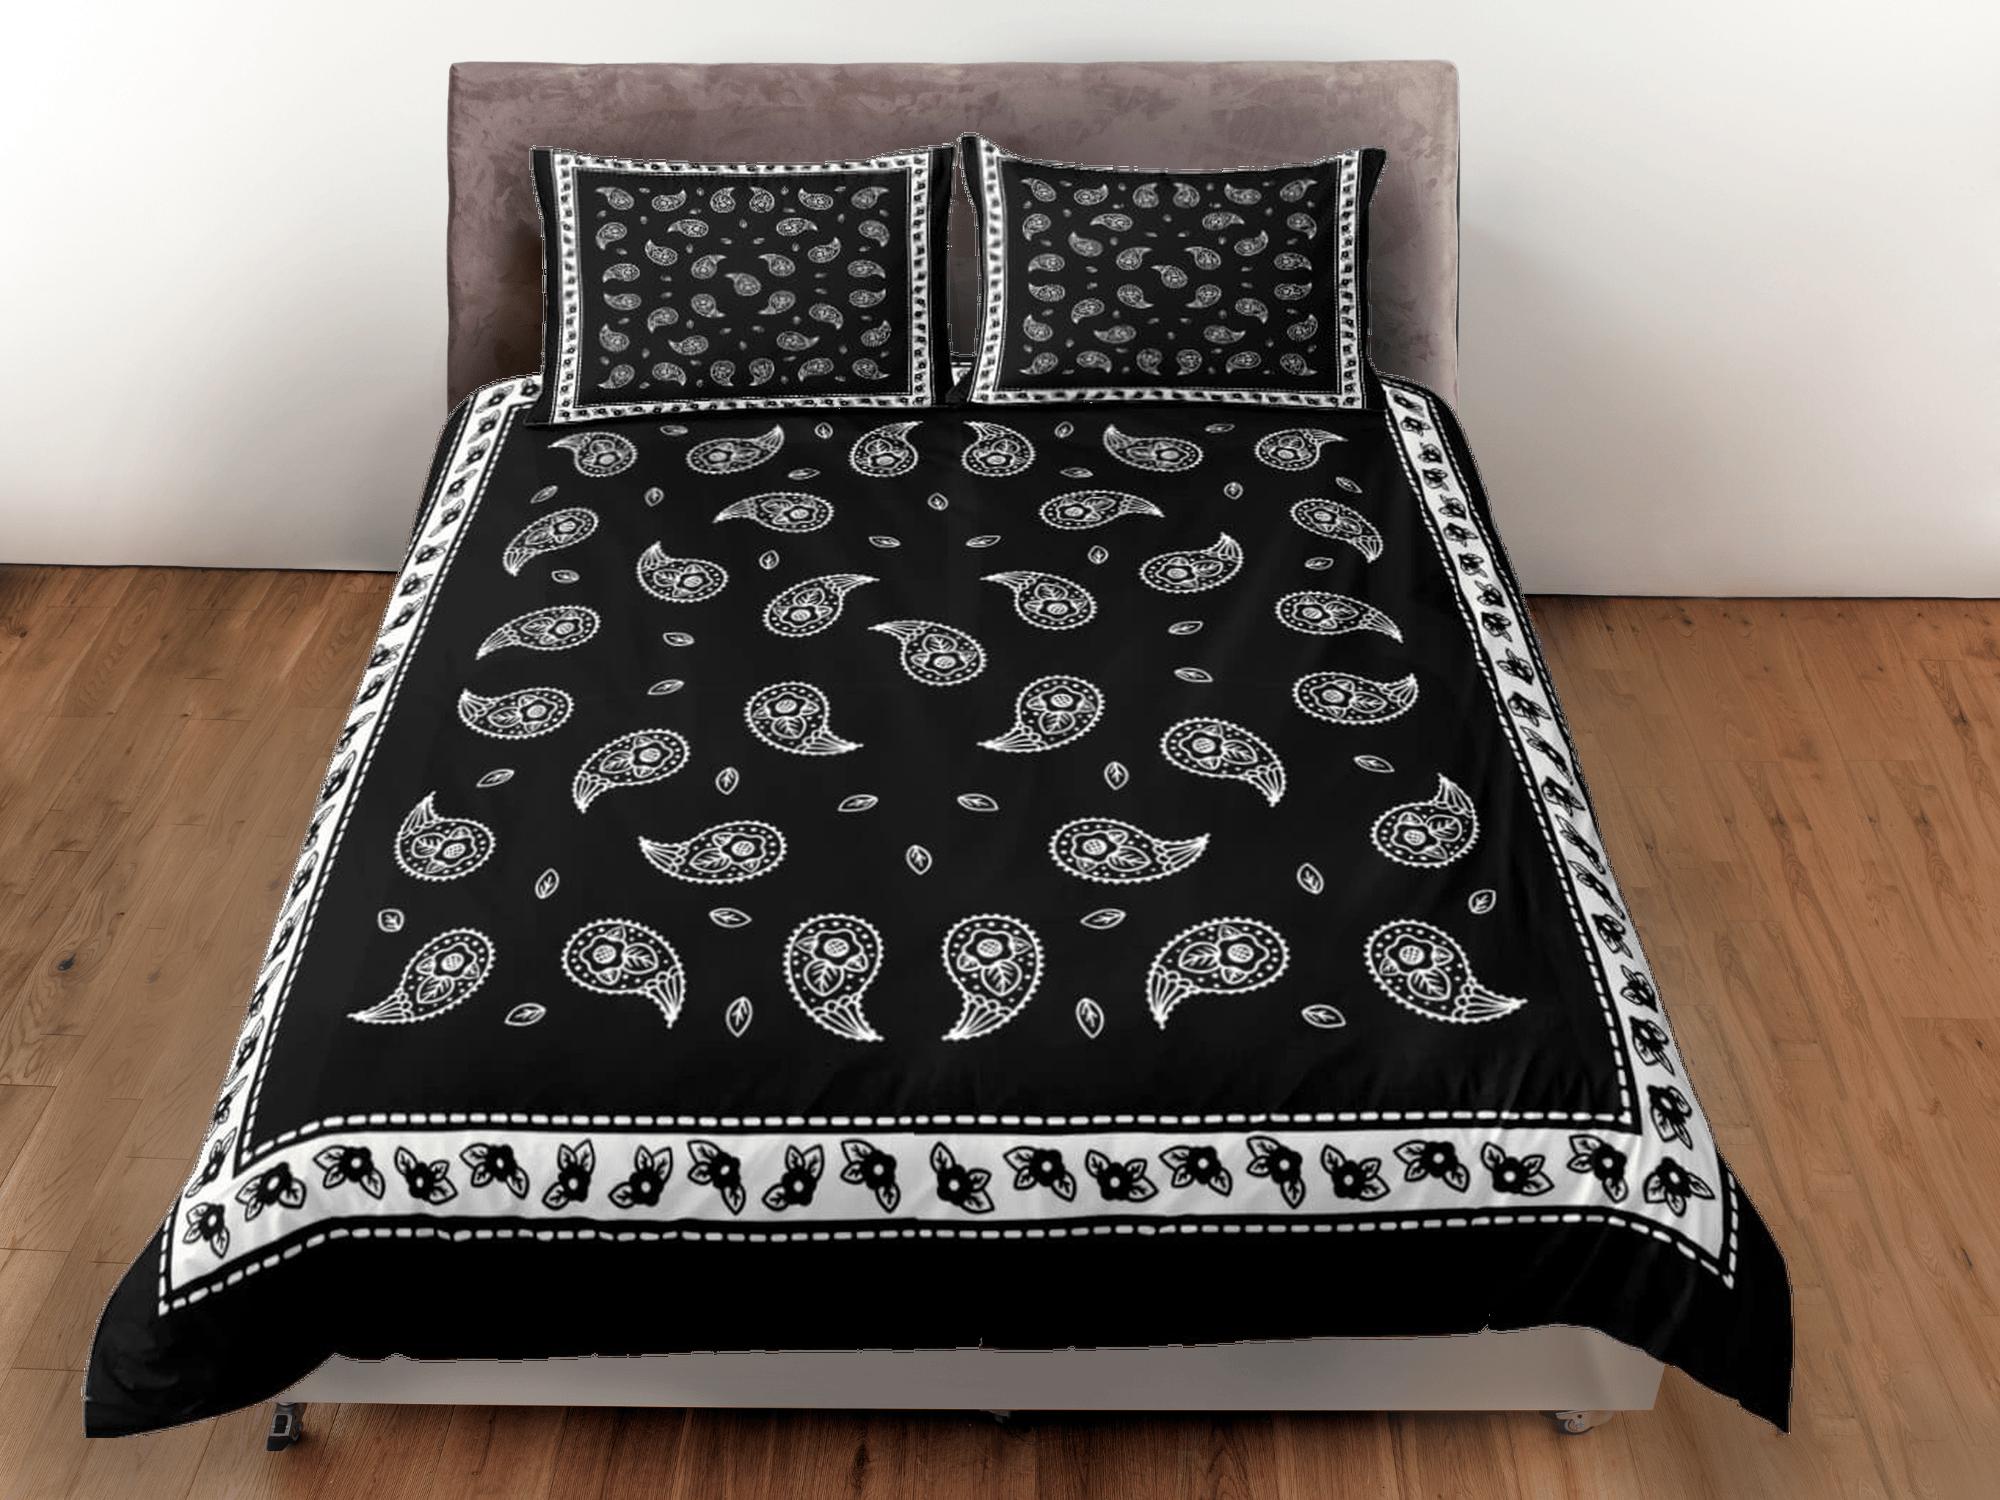 daintyduvet Black bandana paisley duvet cover set, aesthetic room decor bedding set full, king, queen size, abstract boho bedspread, luxury bed cover